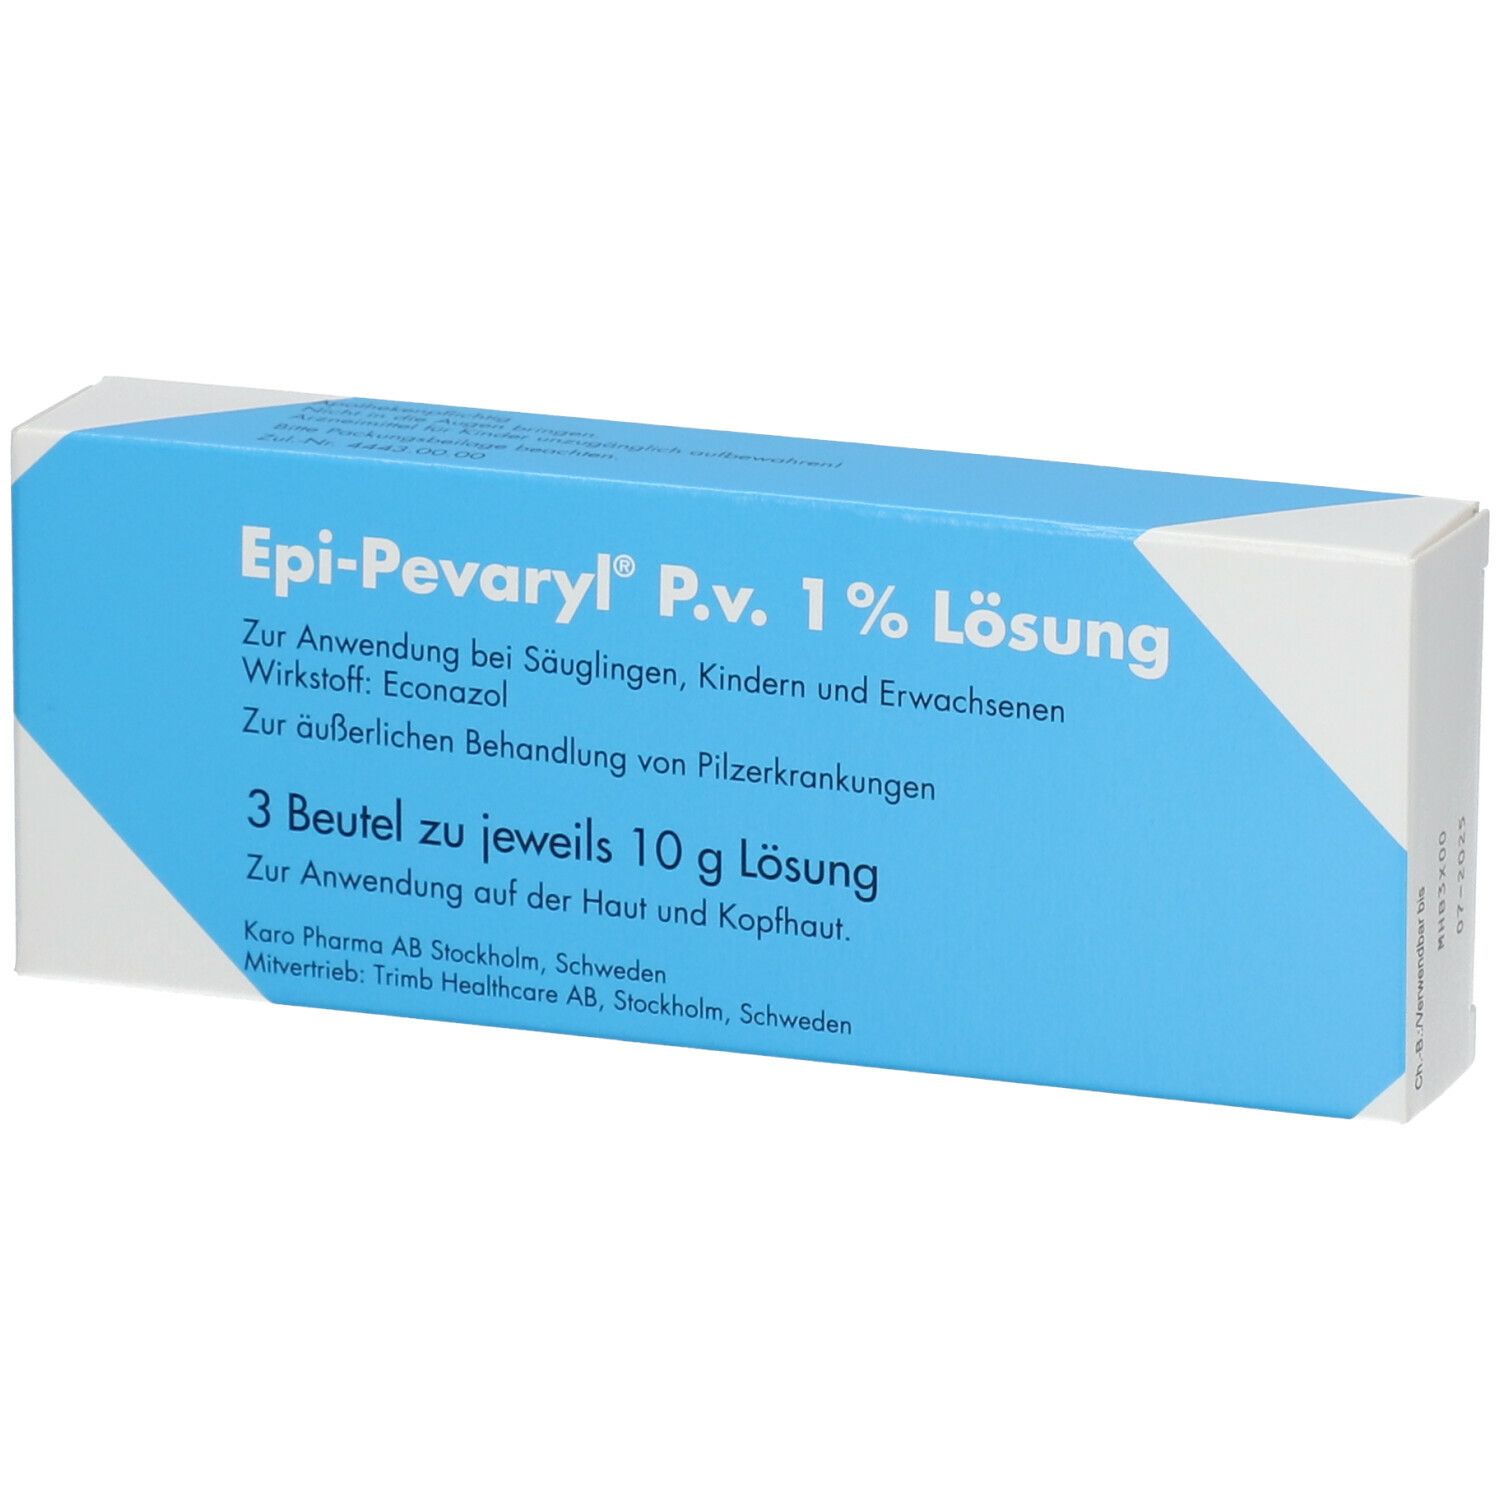 Epi-Pevaryl® P.v. Lösung